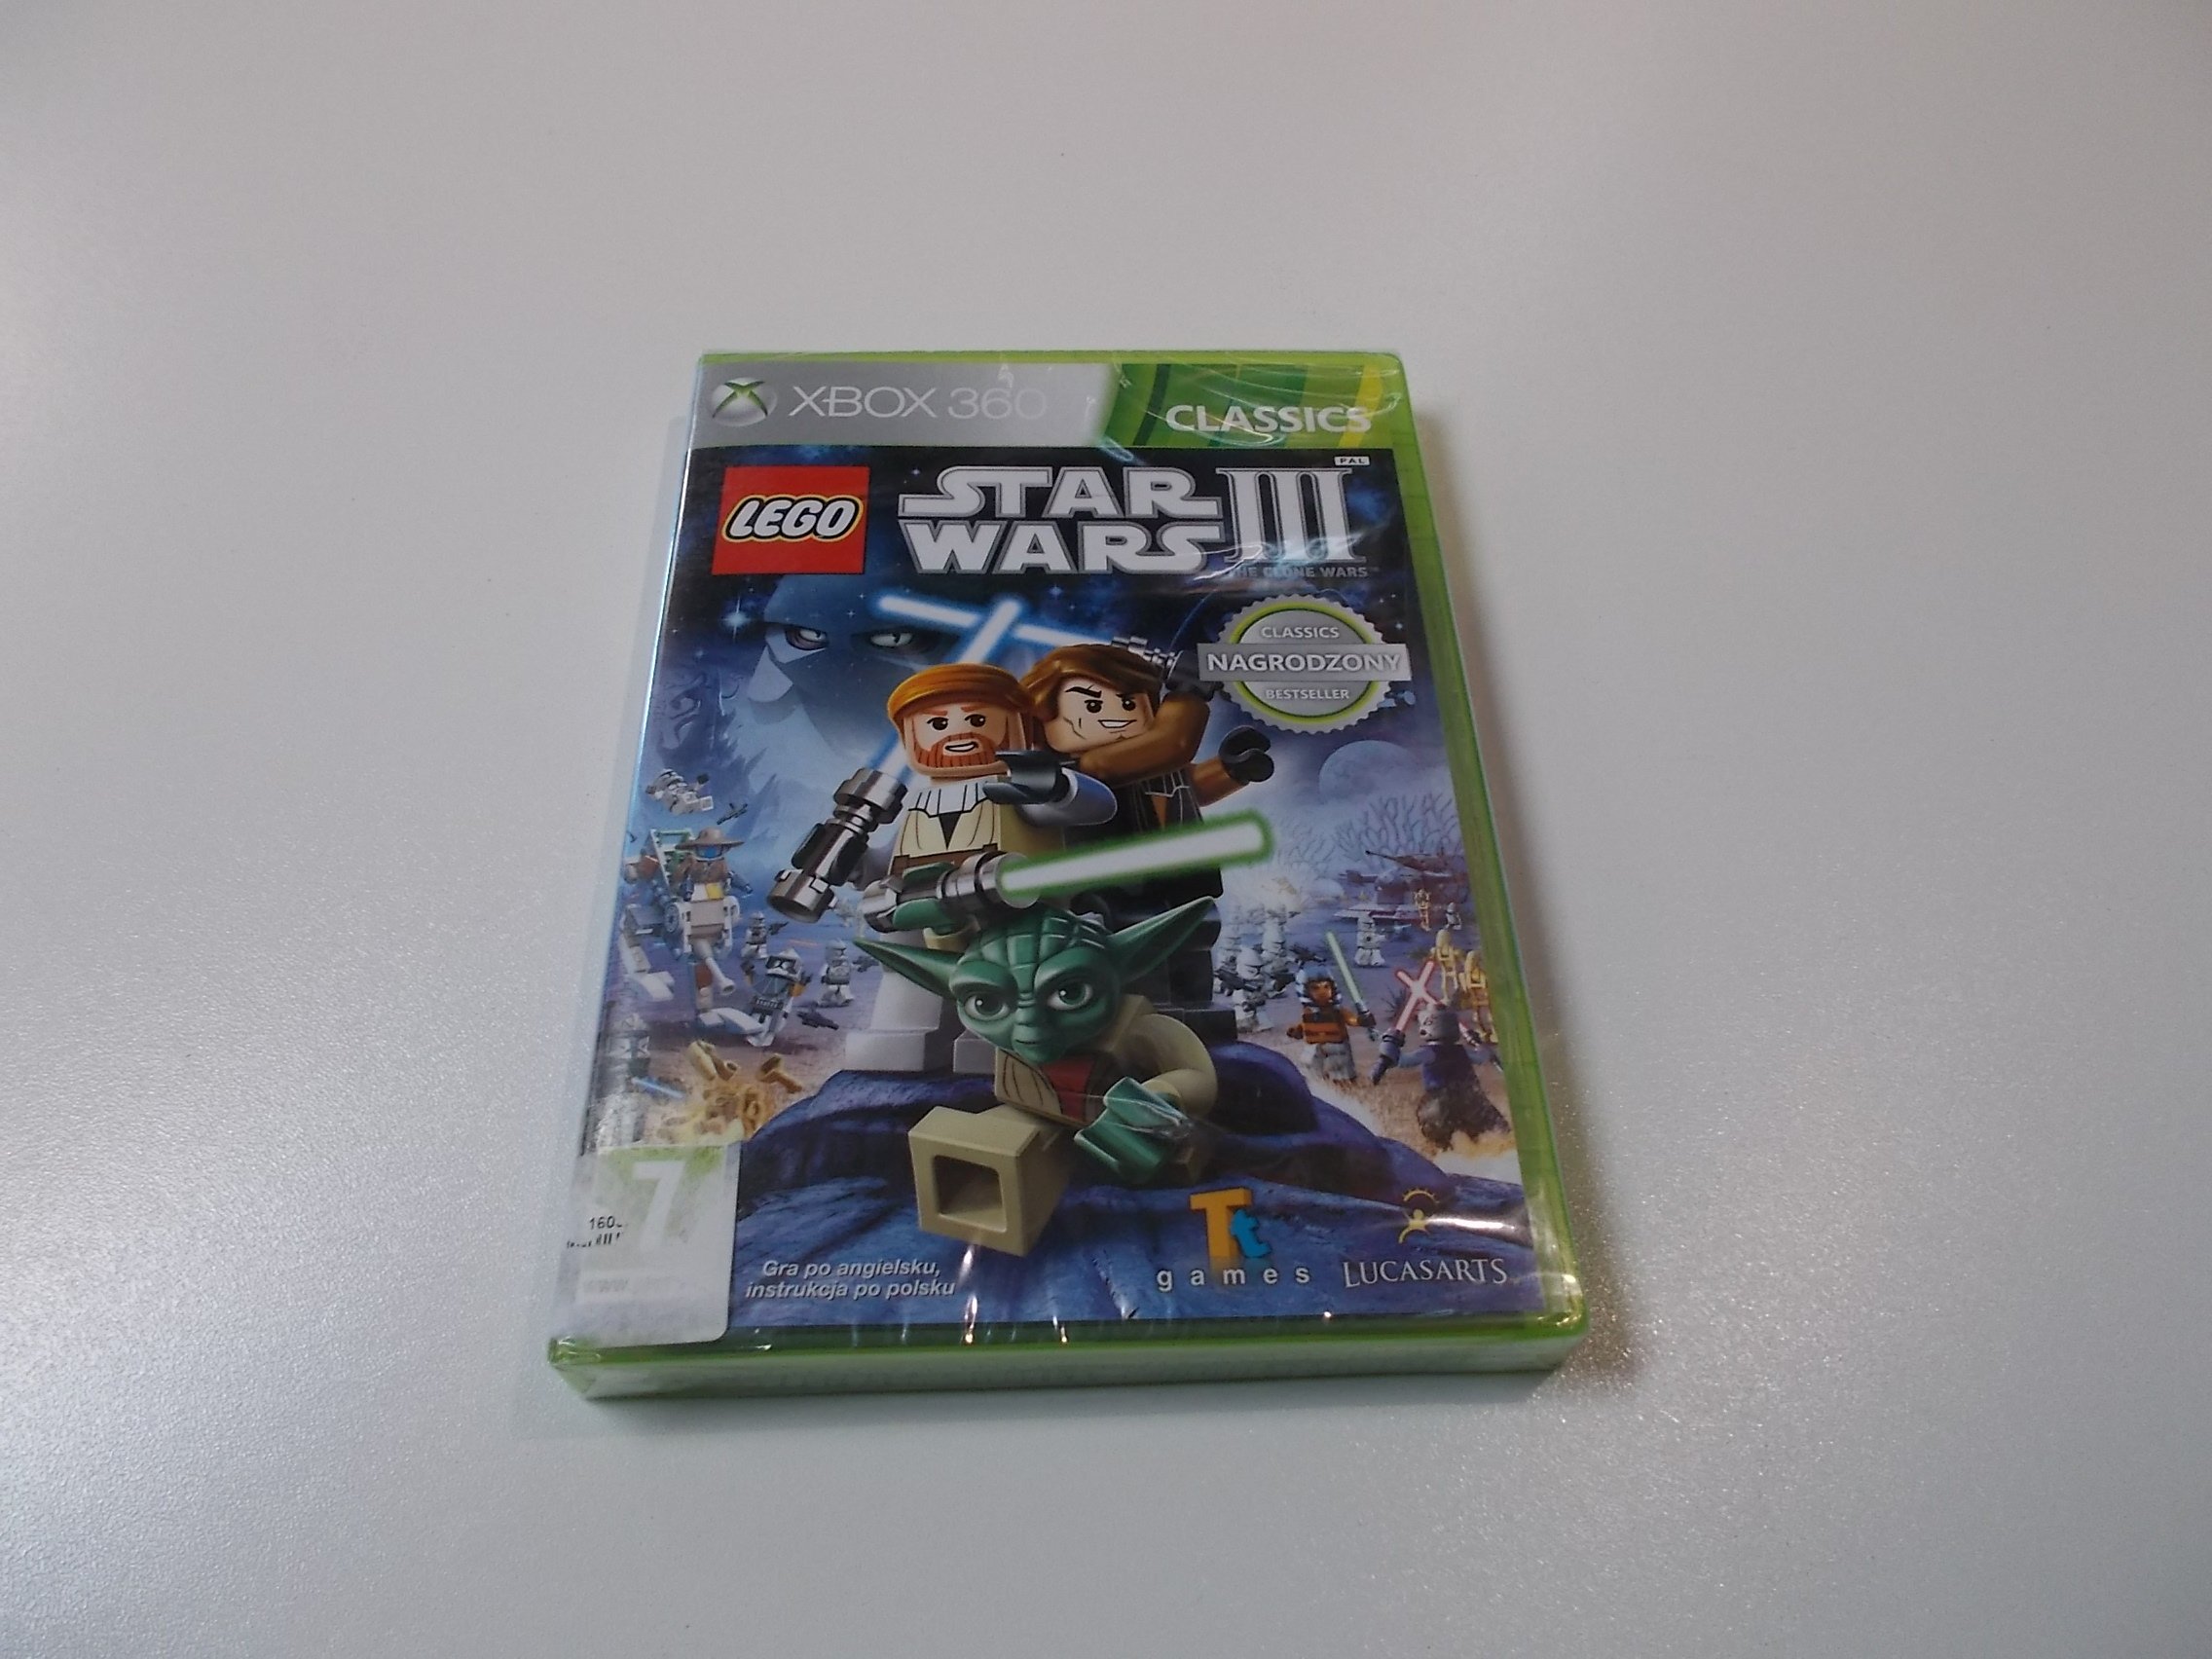 LEGO Star Wars III 3 - GRA Xbox 360 - Opole 0417